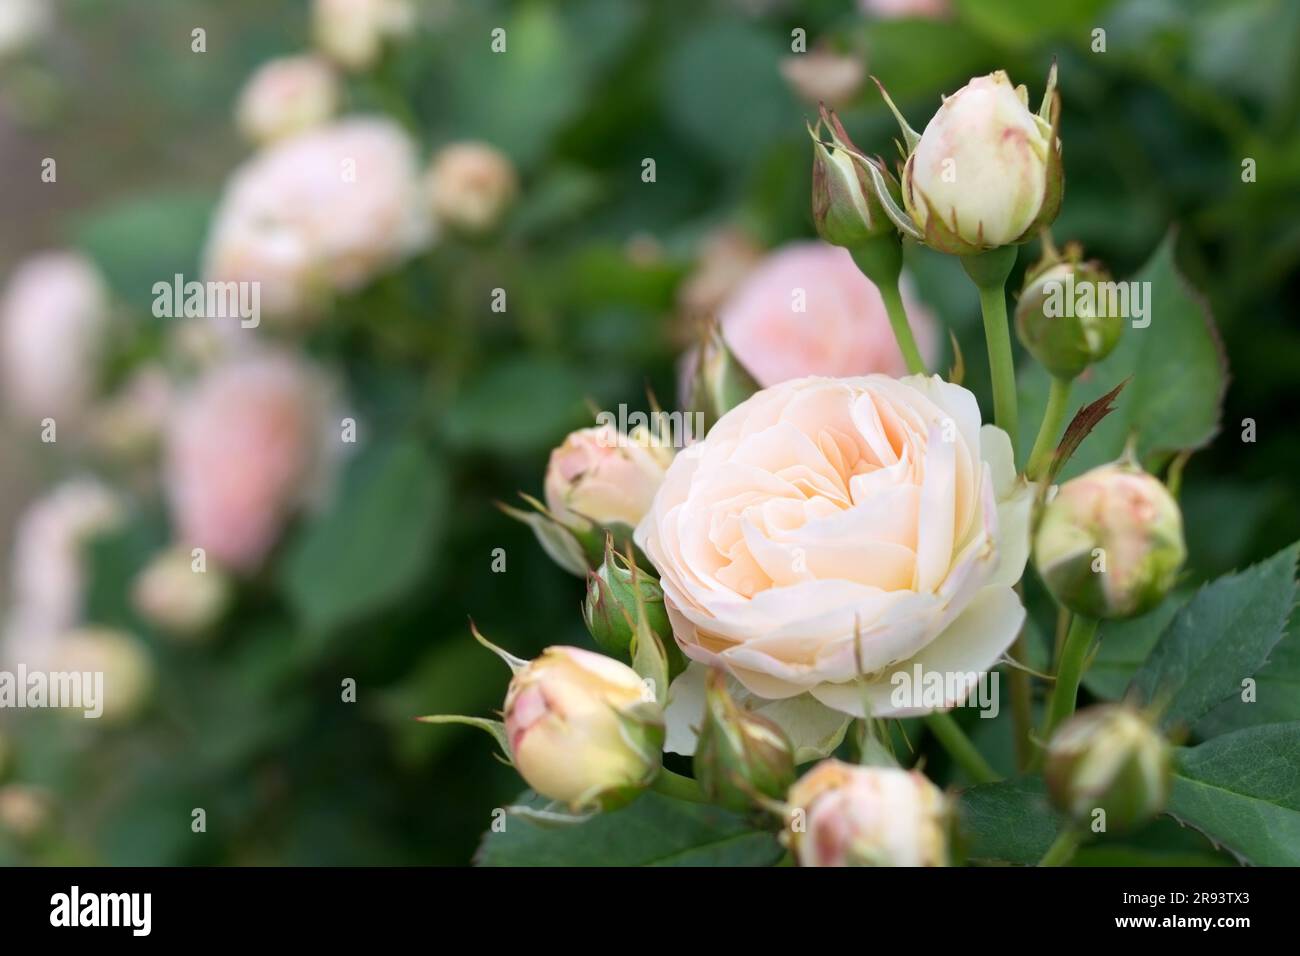 Zarte rosa Sprührose. Hybridrosen aus Polyanthus, cremefarben im Blumenbeet. Sorte Pastella. Stockfoto